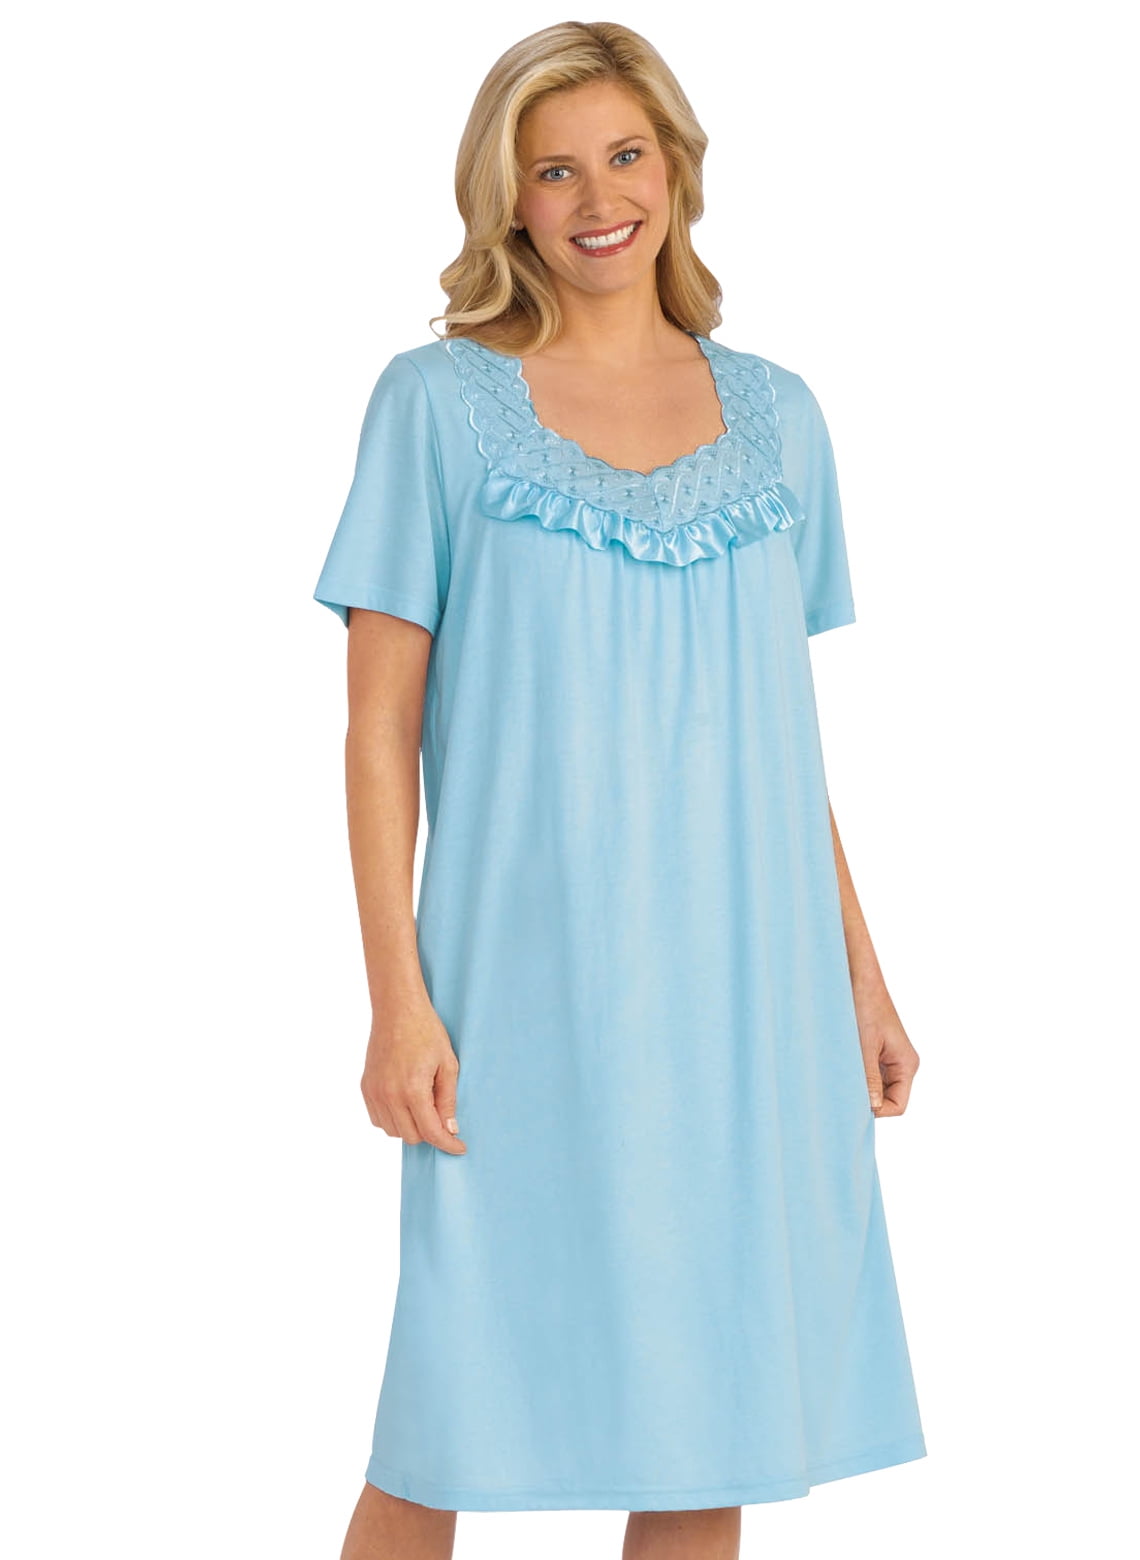 Cotton Knit Nightgown - Walmart.com - Walmart.com